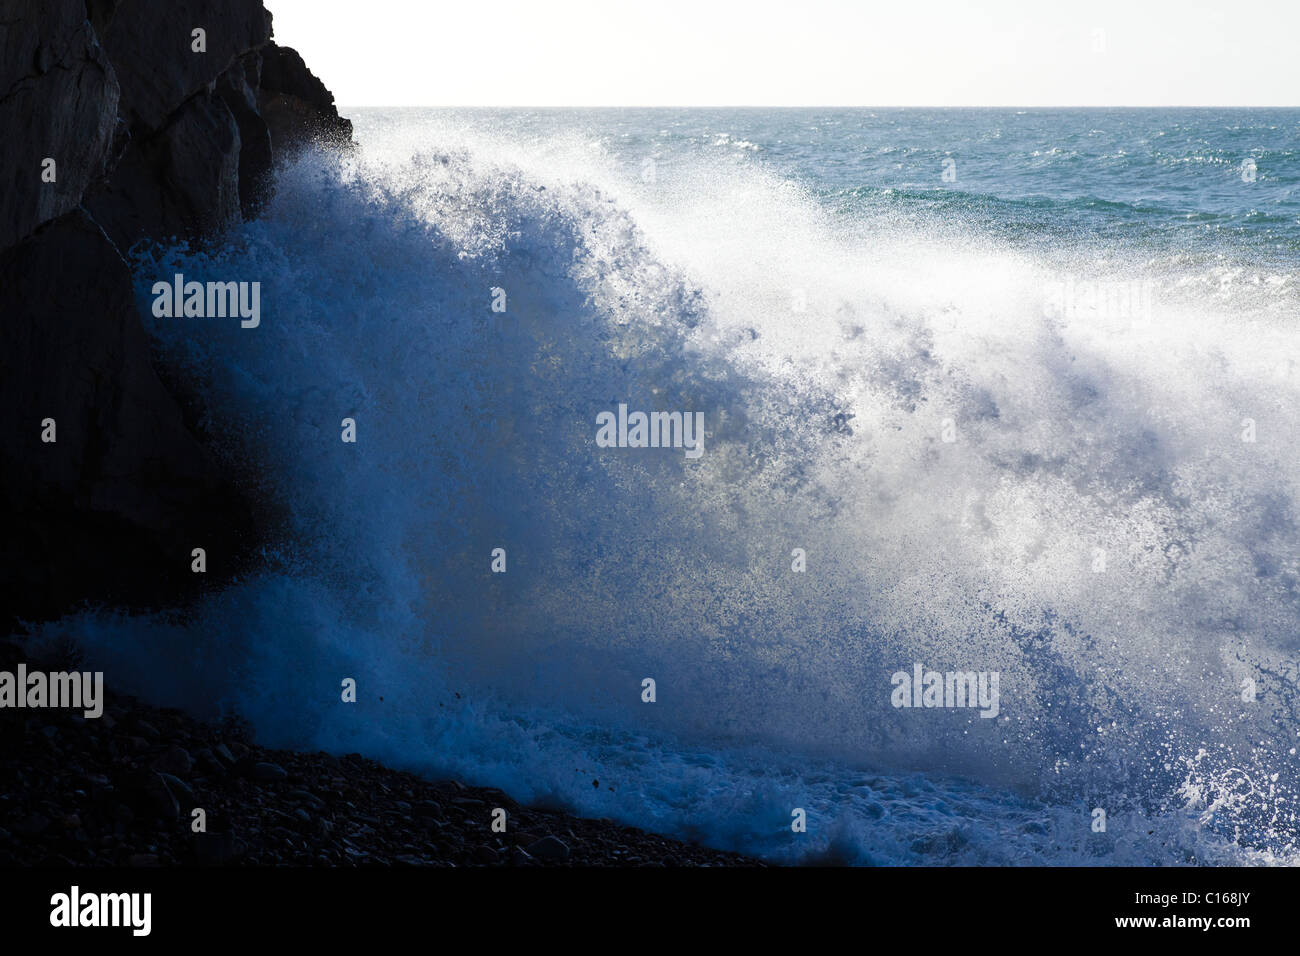 Heavy Atlantic seas with large waves crashing onto rocks at Ajuy on the Canary Island of Fuerteventura Stock Photo